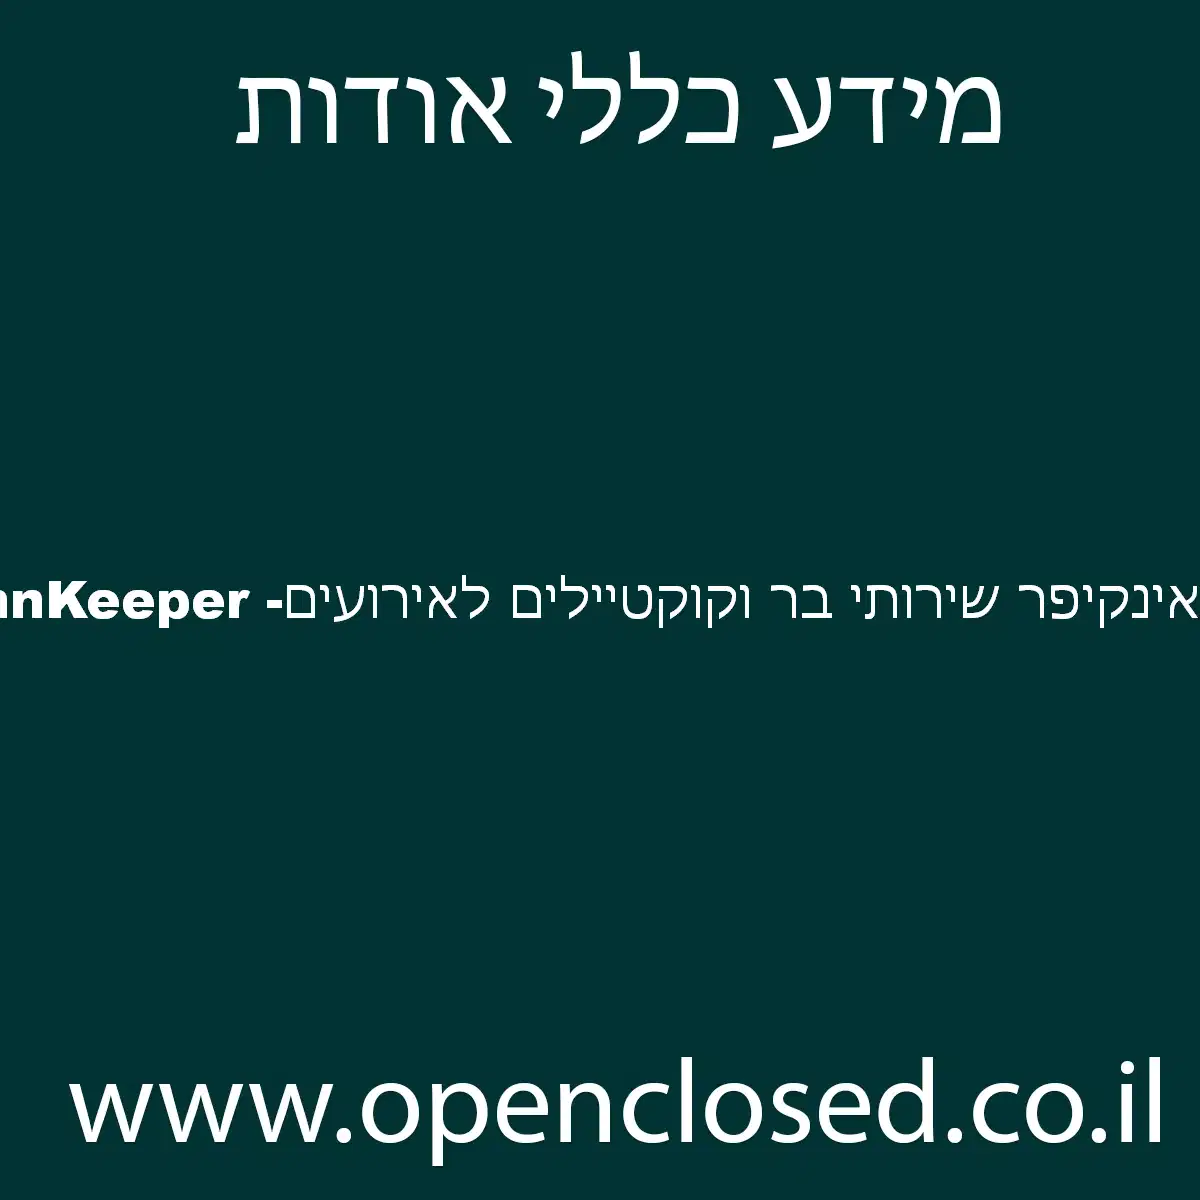 InnKeeper -אינקיפר שירותי בר וקוקטיילים לאירועים